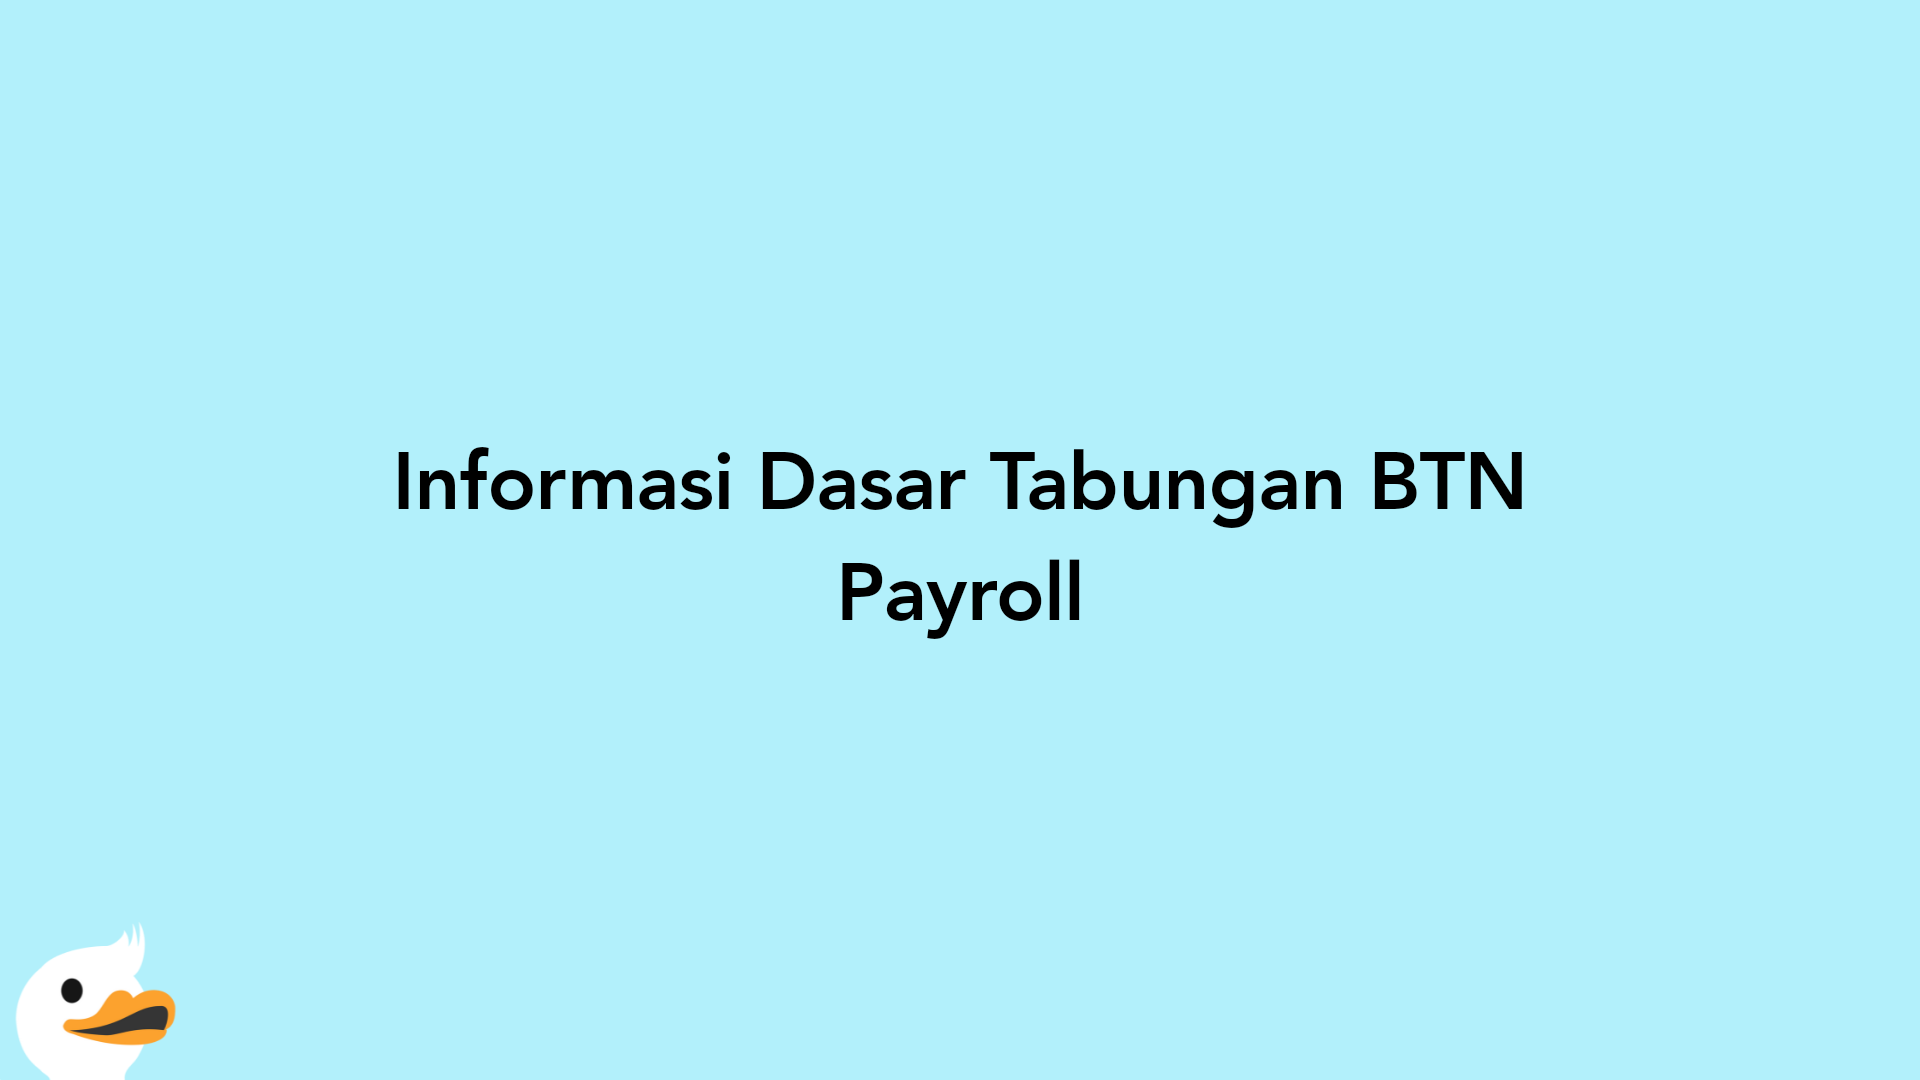 Informasi Dasar Tabungan BTN Payroll